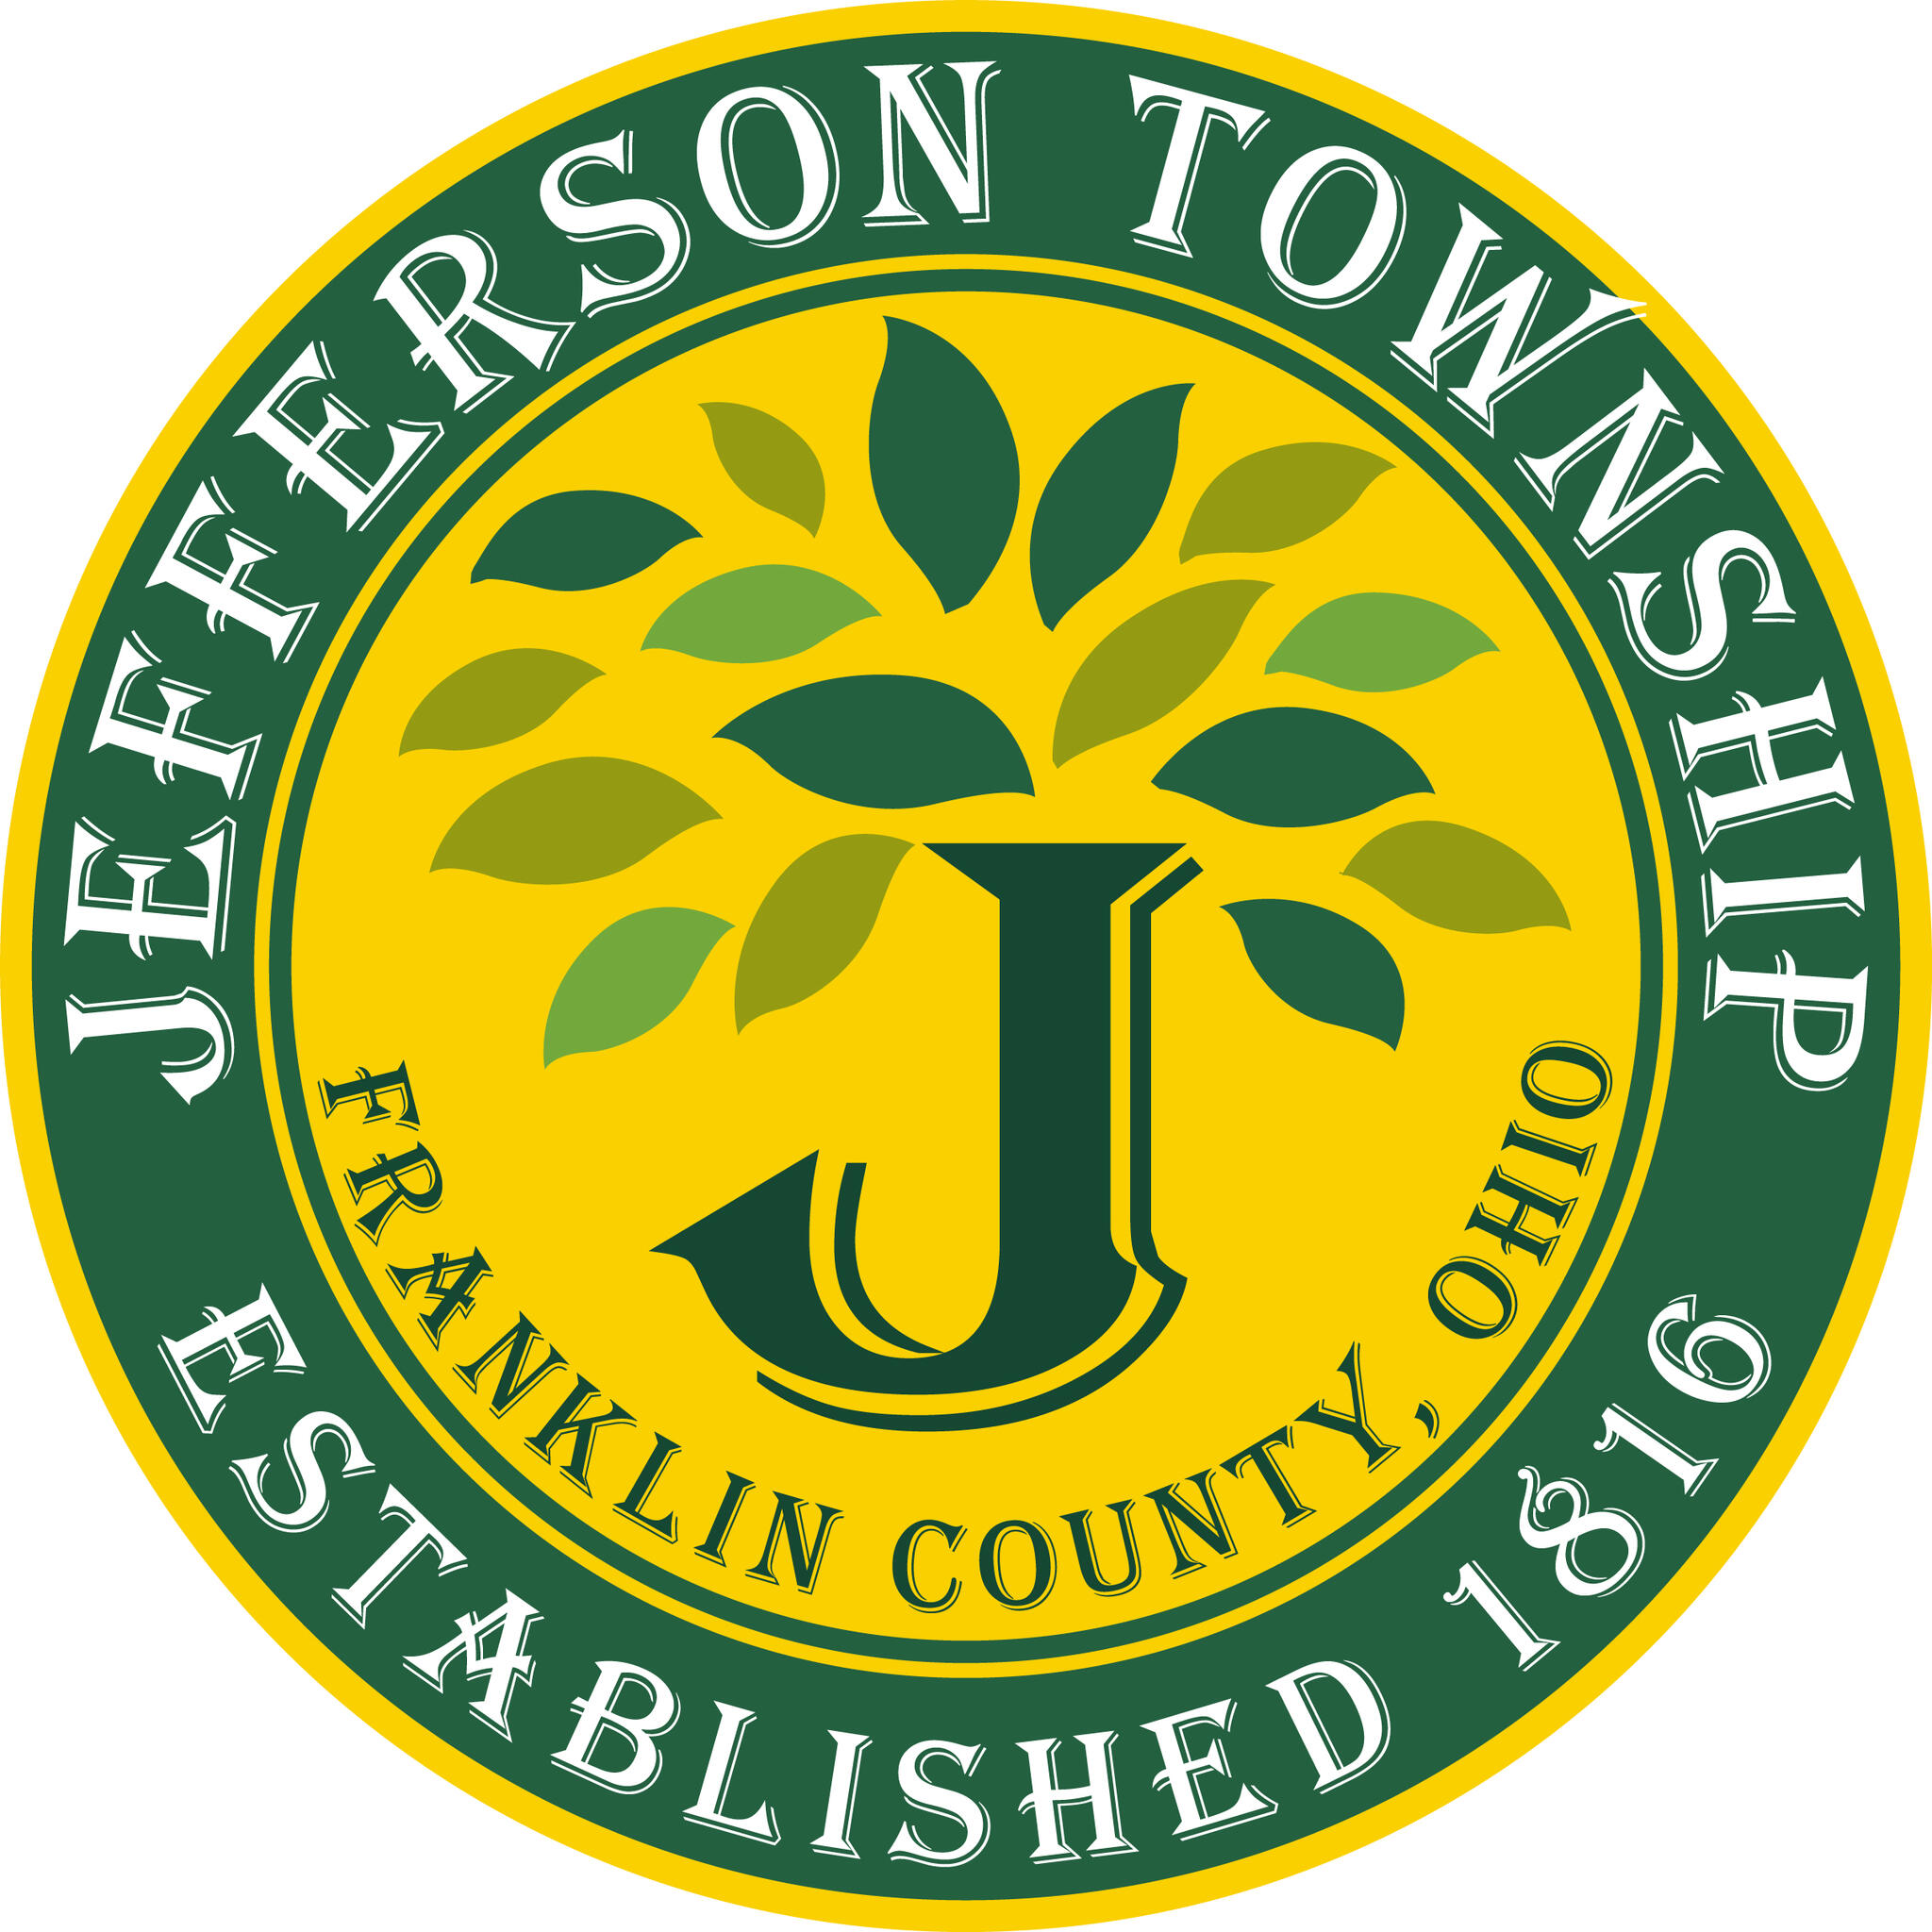 jefferson washington township